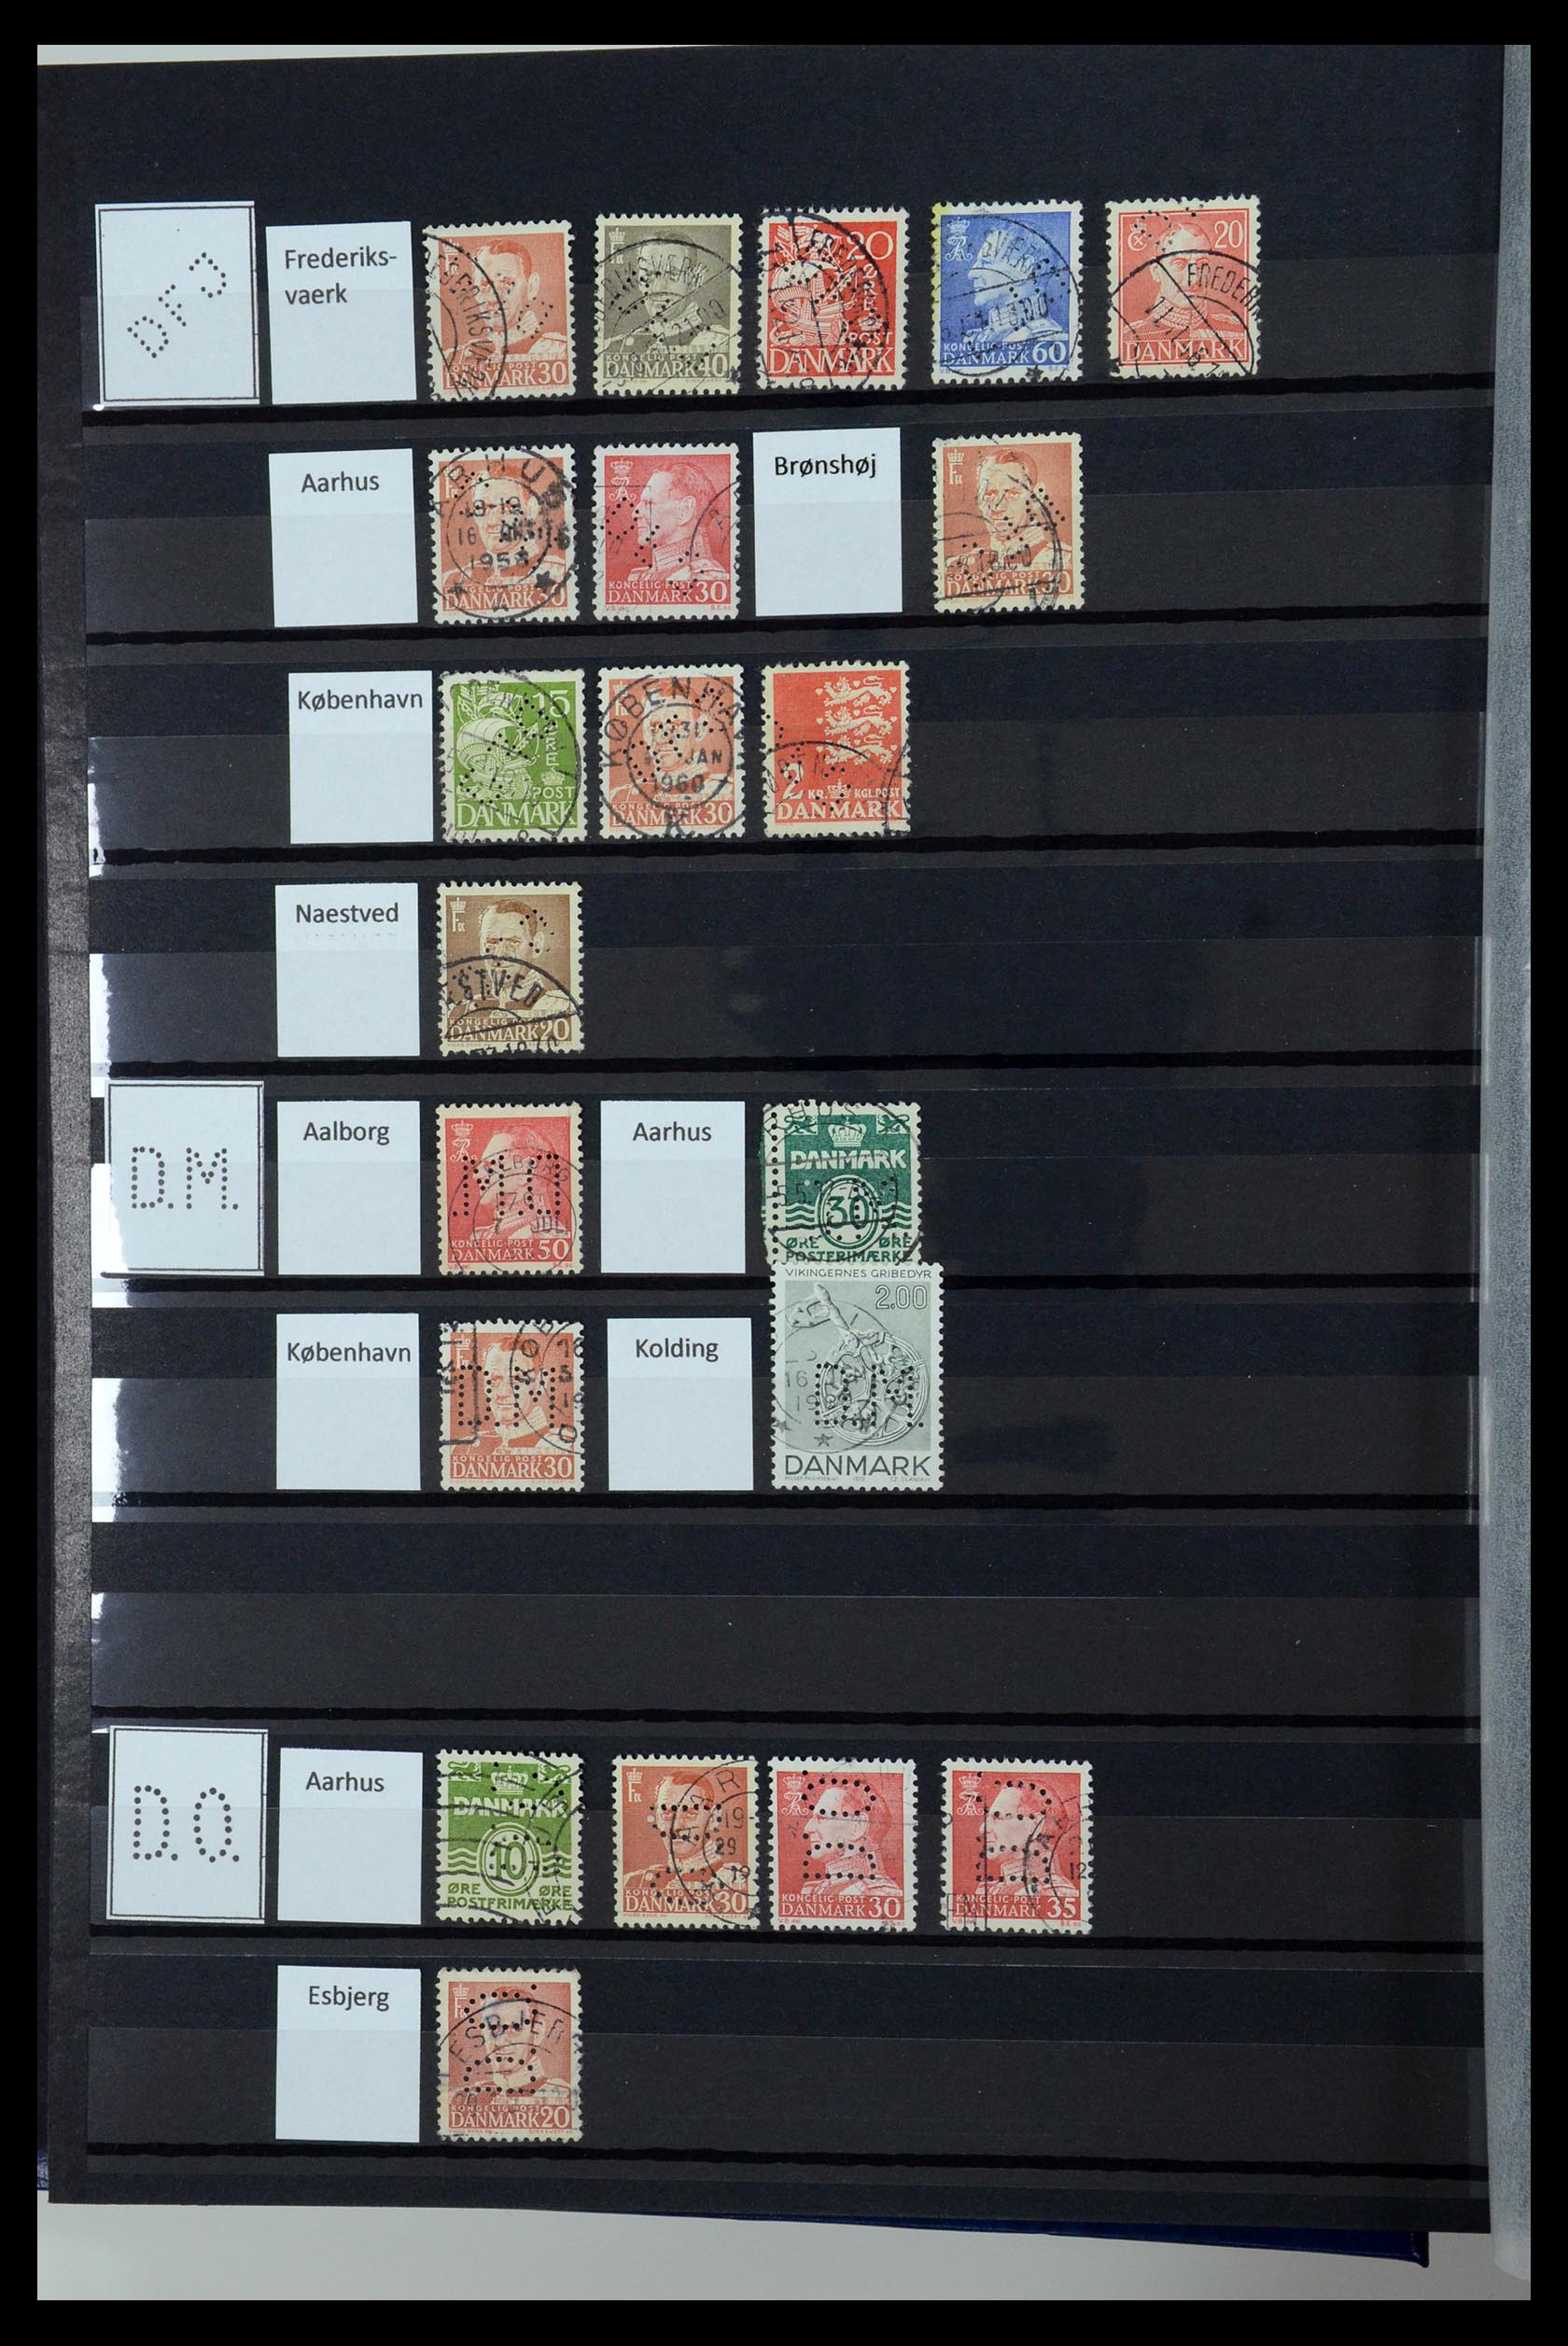 36396 063 - Stamp collection 36396 Denmark perfins.